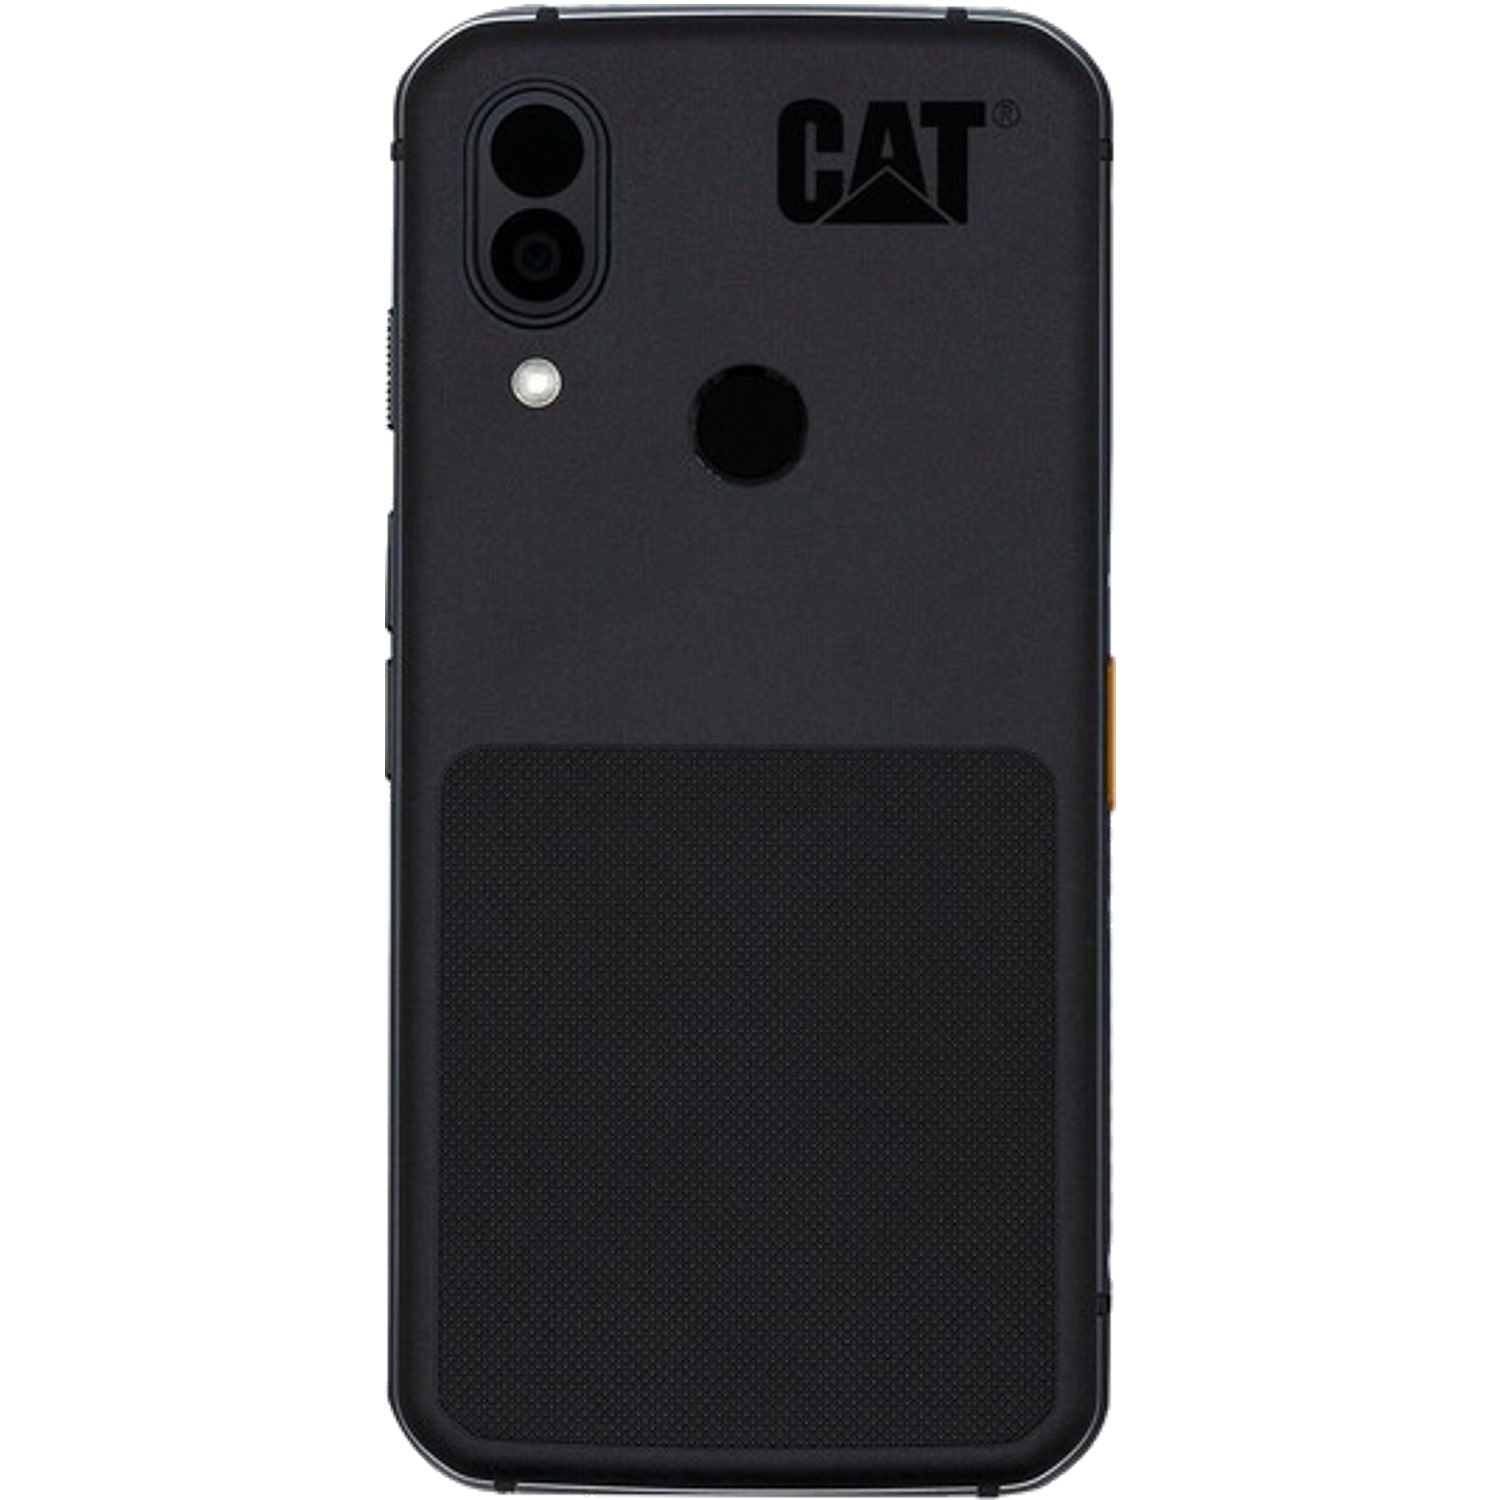 Cat S62 Pro Smartphone